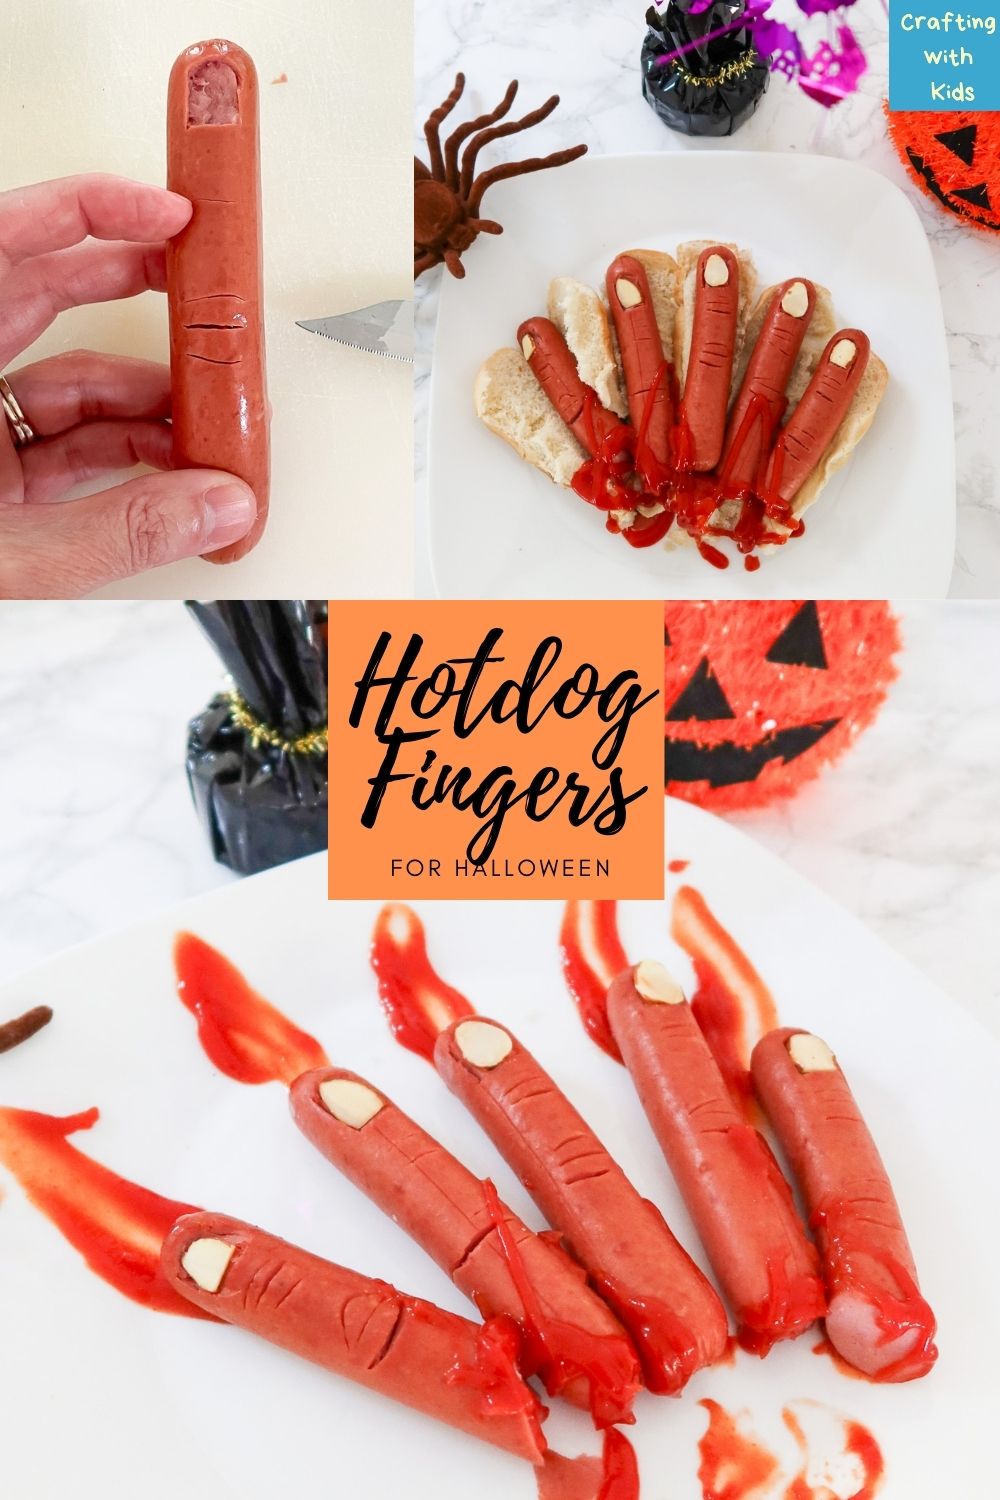 Halloween Hotdog fingers